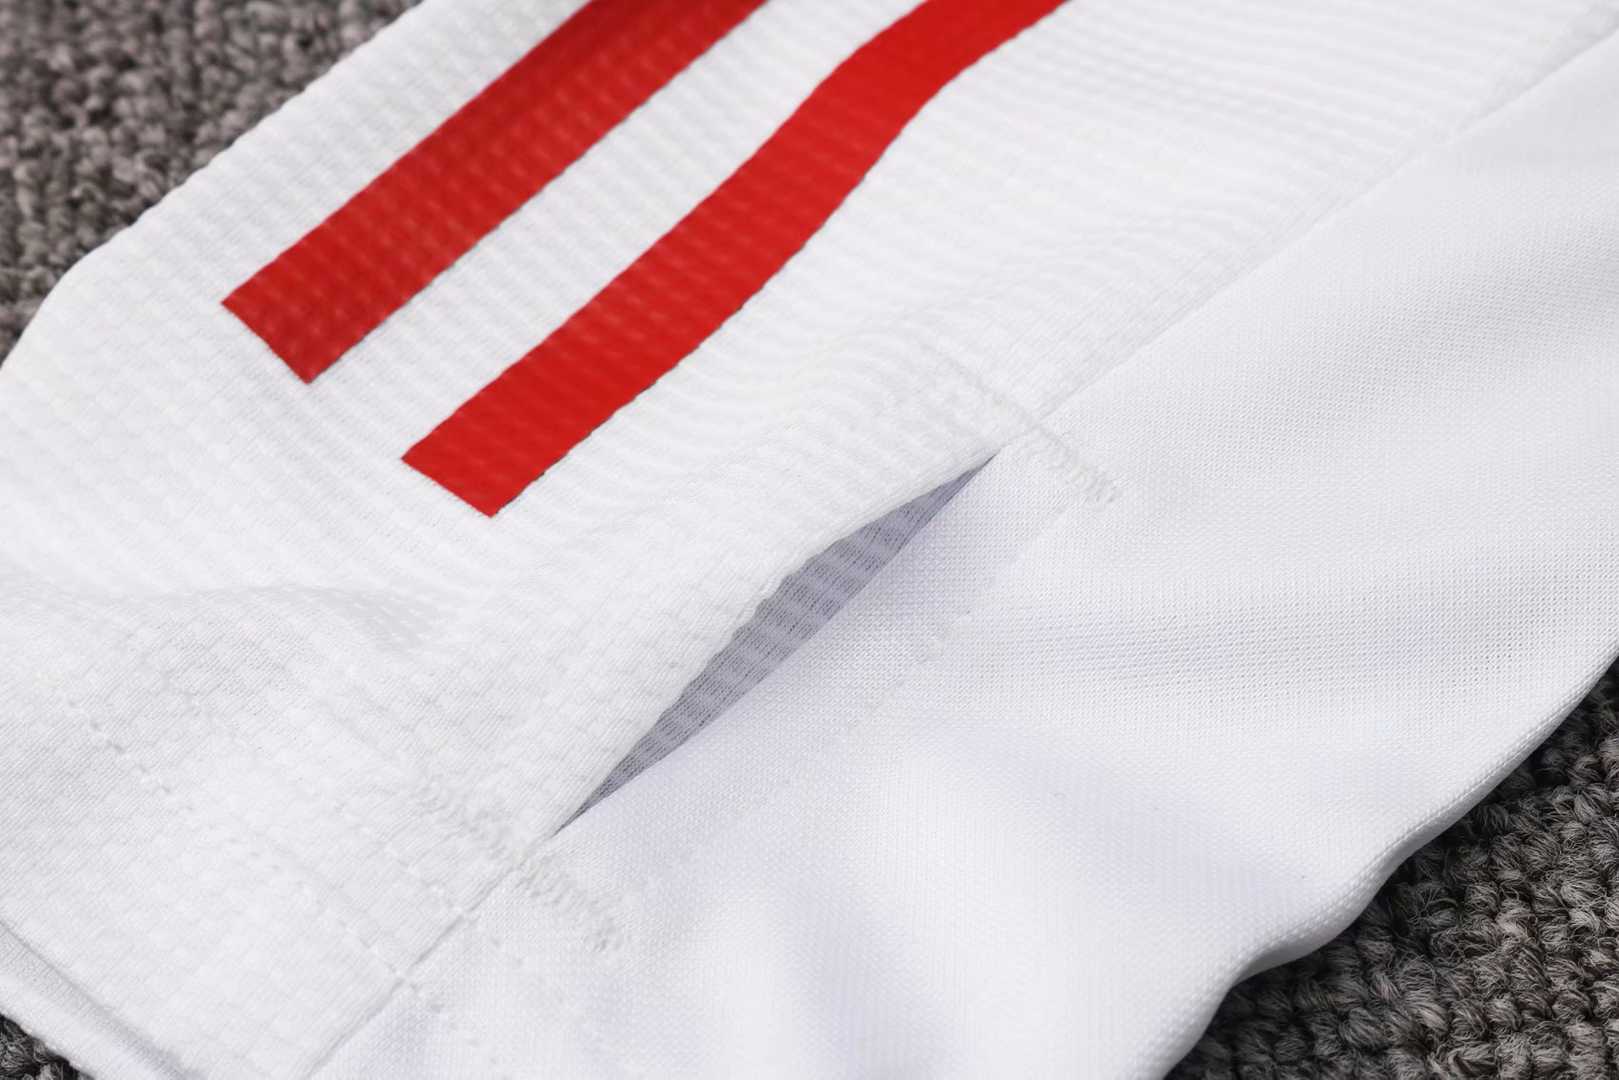 2020/21 Sao Paulo FC White Half Zip Mens Soccer Training Suit(SweatJersey + Pants)